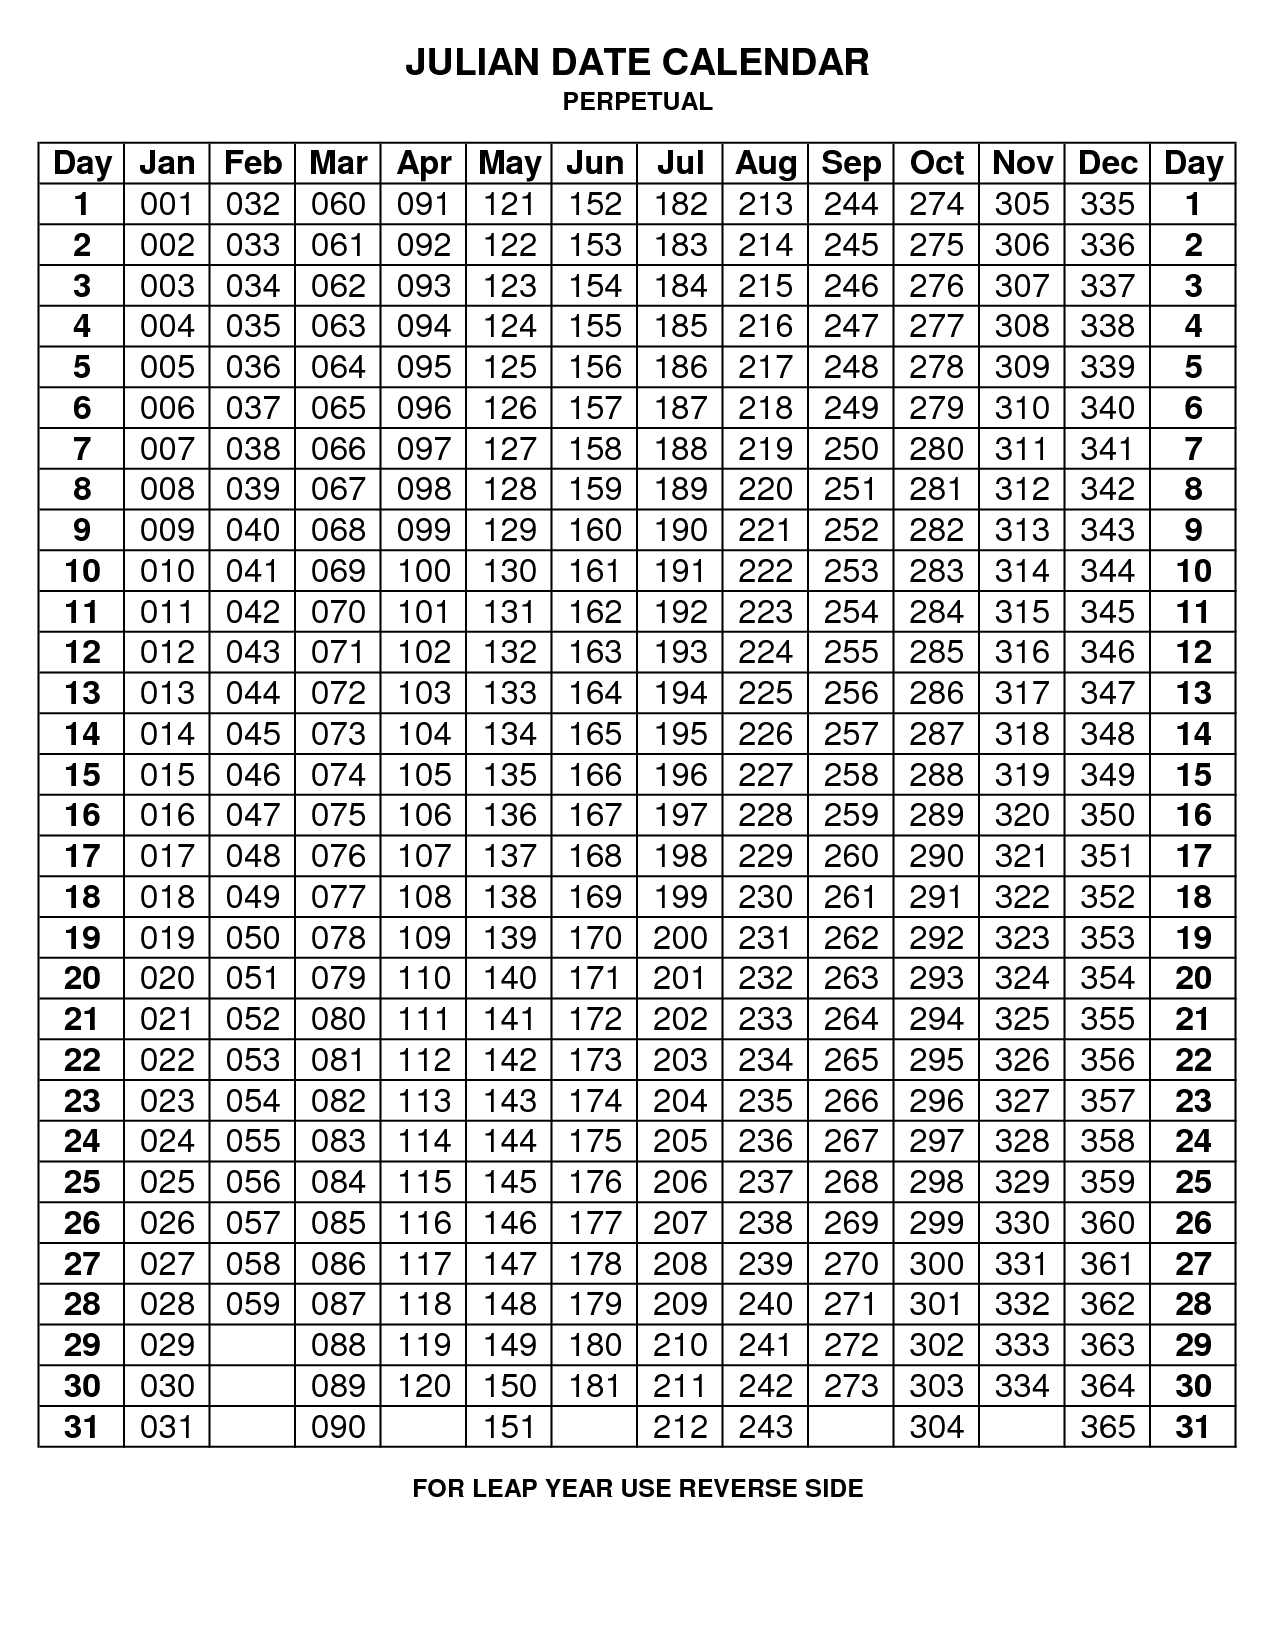 Julian Code  Nonleap Year | Julian Dates, Printable pertaining to Julian Date Calendar Leap Year